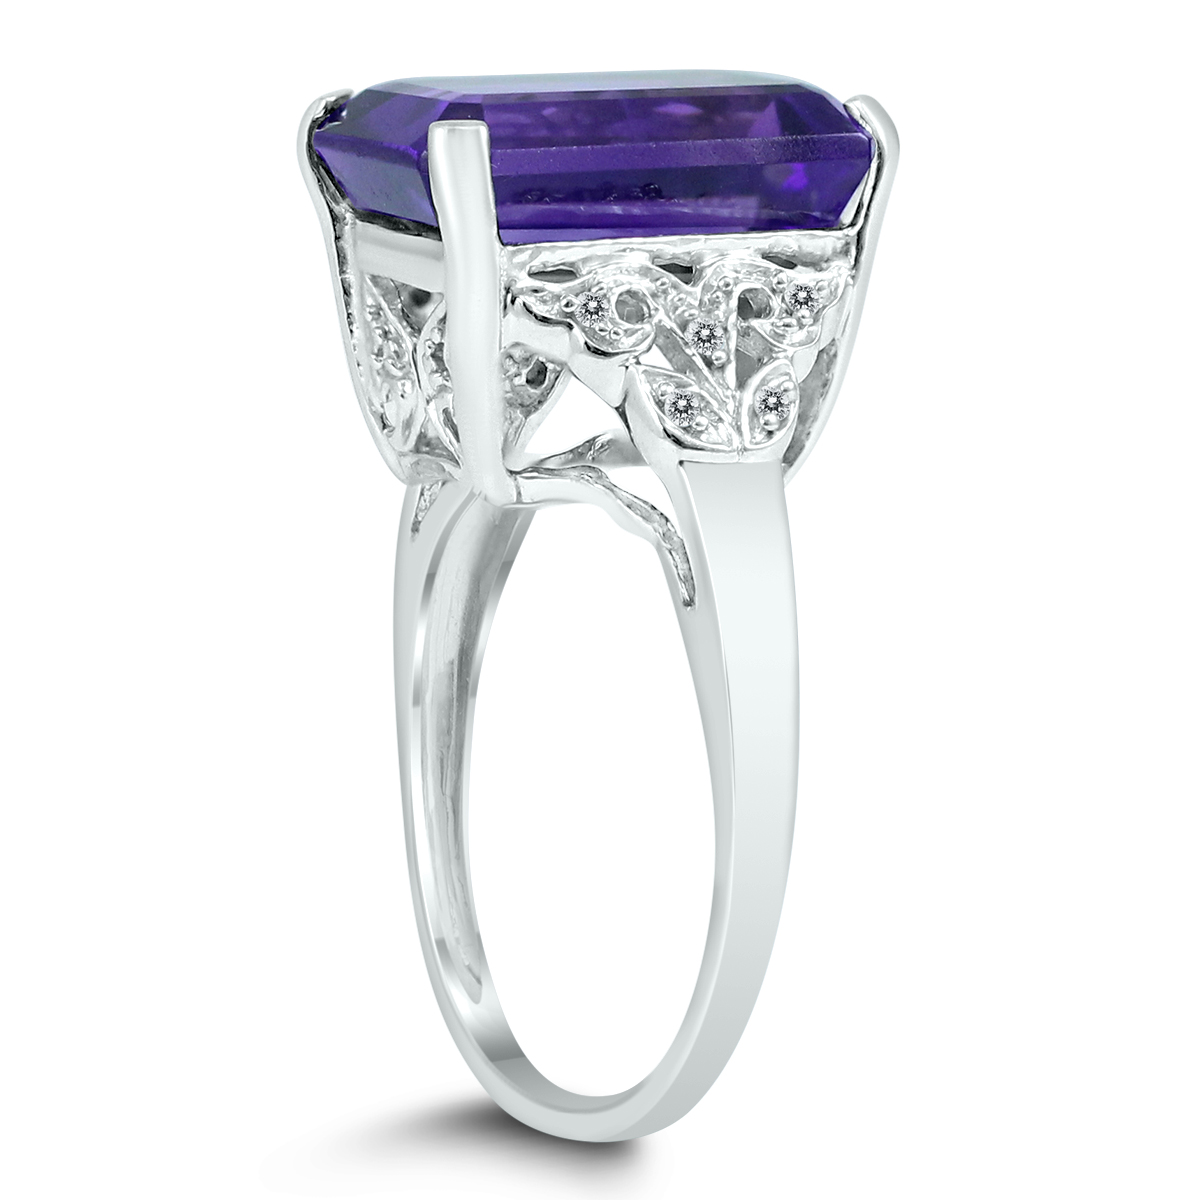 szul.com Amethyst and Diamond Royal Splendor Cocktail Ring in .925 Sterling Silver